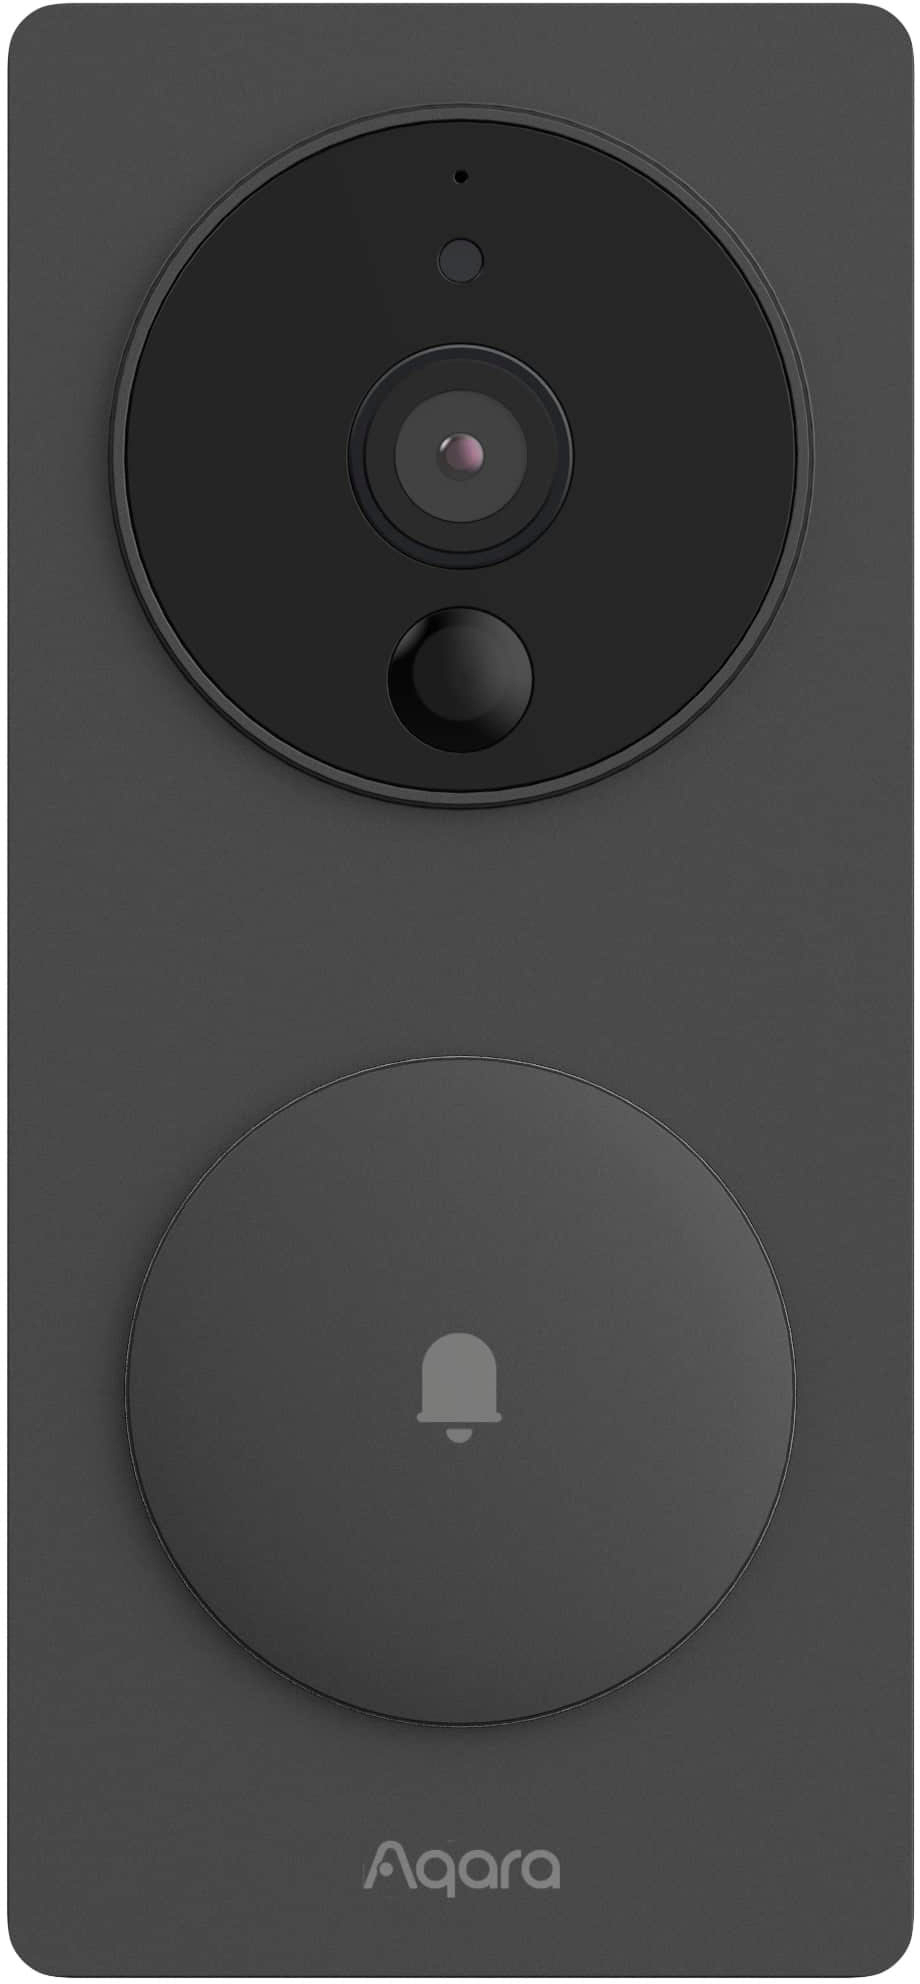 Left View: Kwikset - Halo Smart Lock Wi-Fi Replacement Deadbolt with App/Touchscreen/Key Access - Matte Black